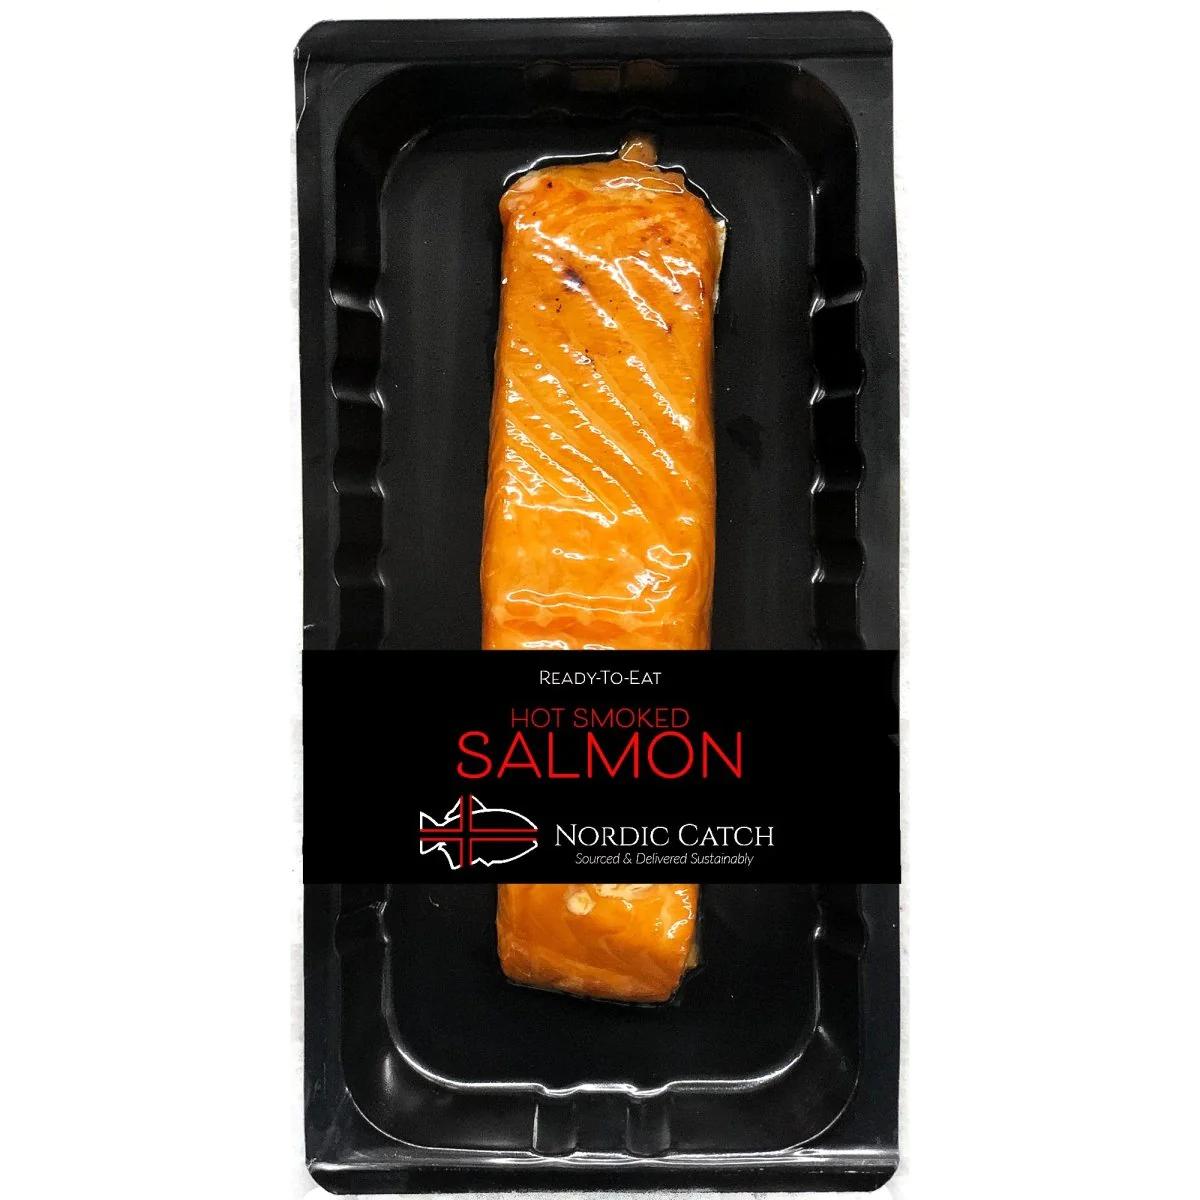 icelandic smoked salmon - Where is Icelandic salmon from